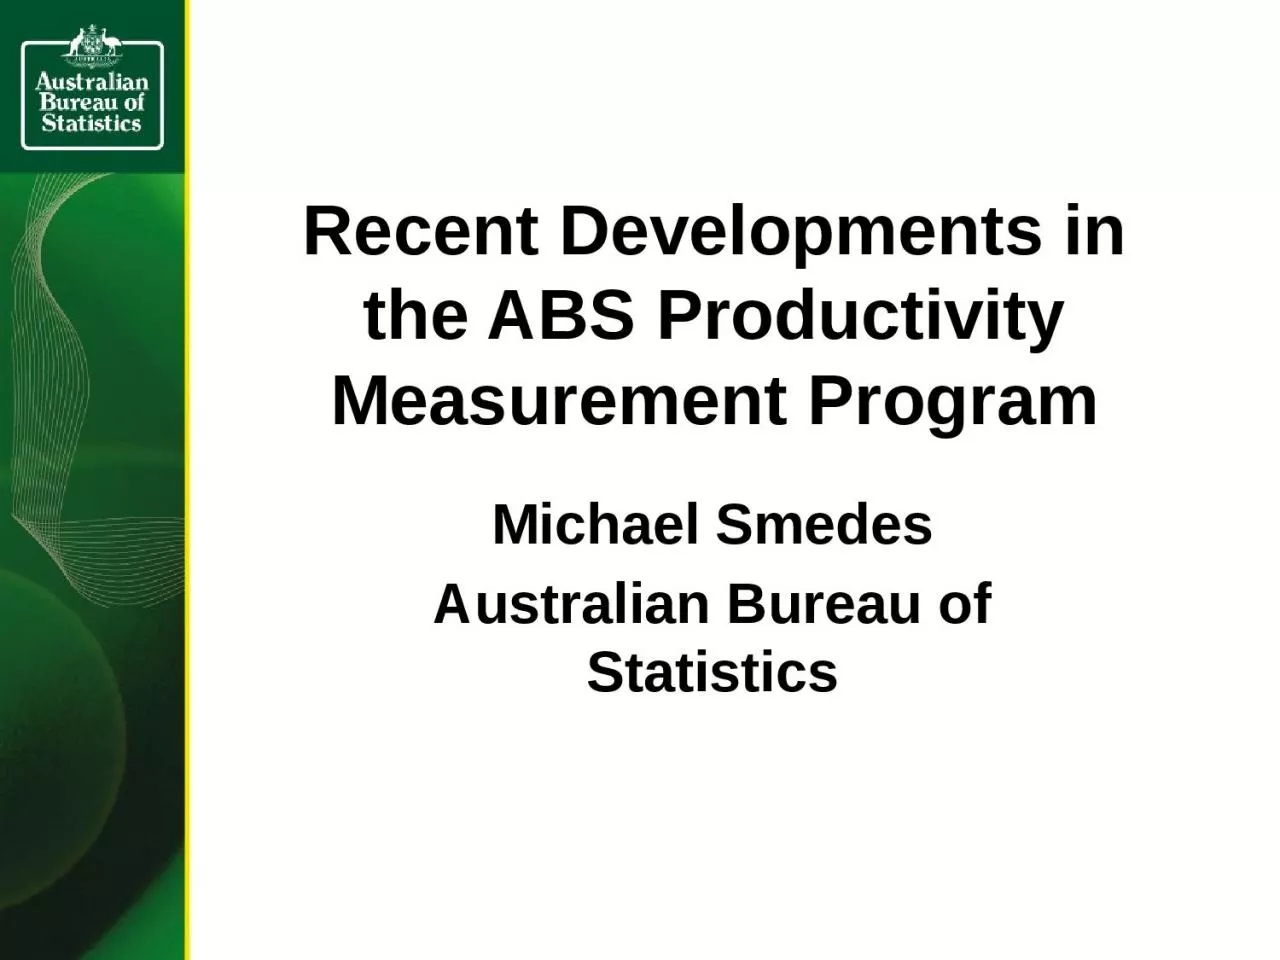 Recent Developments in the ABS Productivity Measurement Program